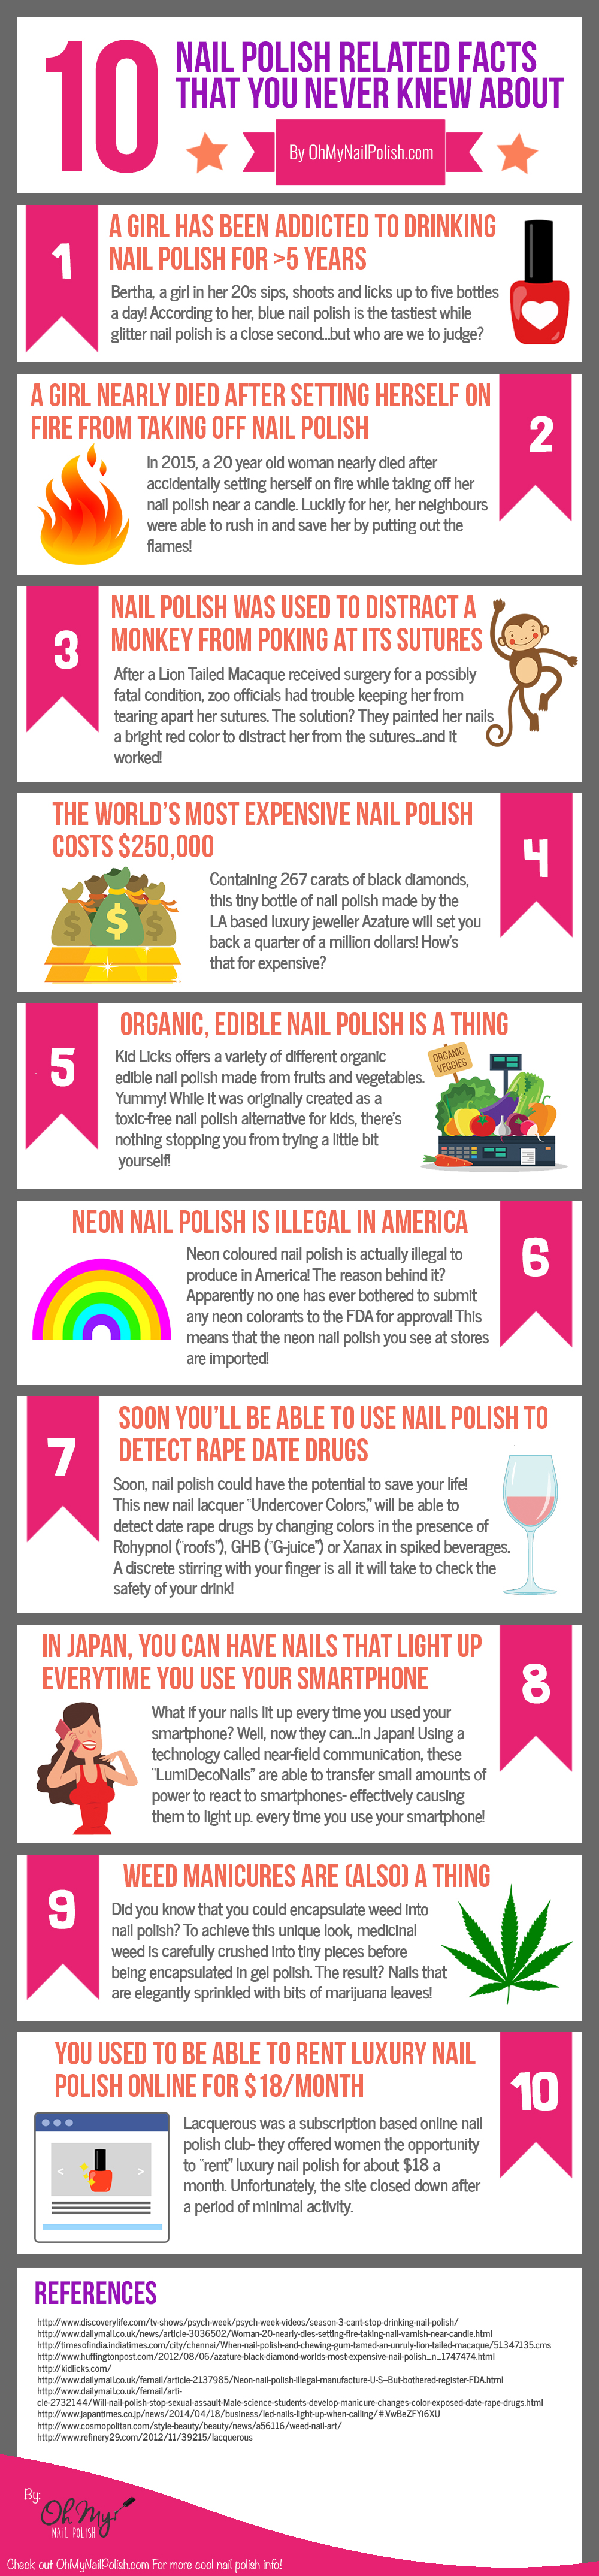 10 Interesting Facts about Nail Polish